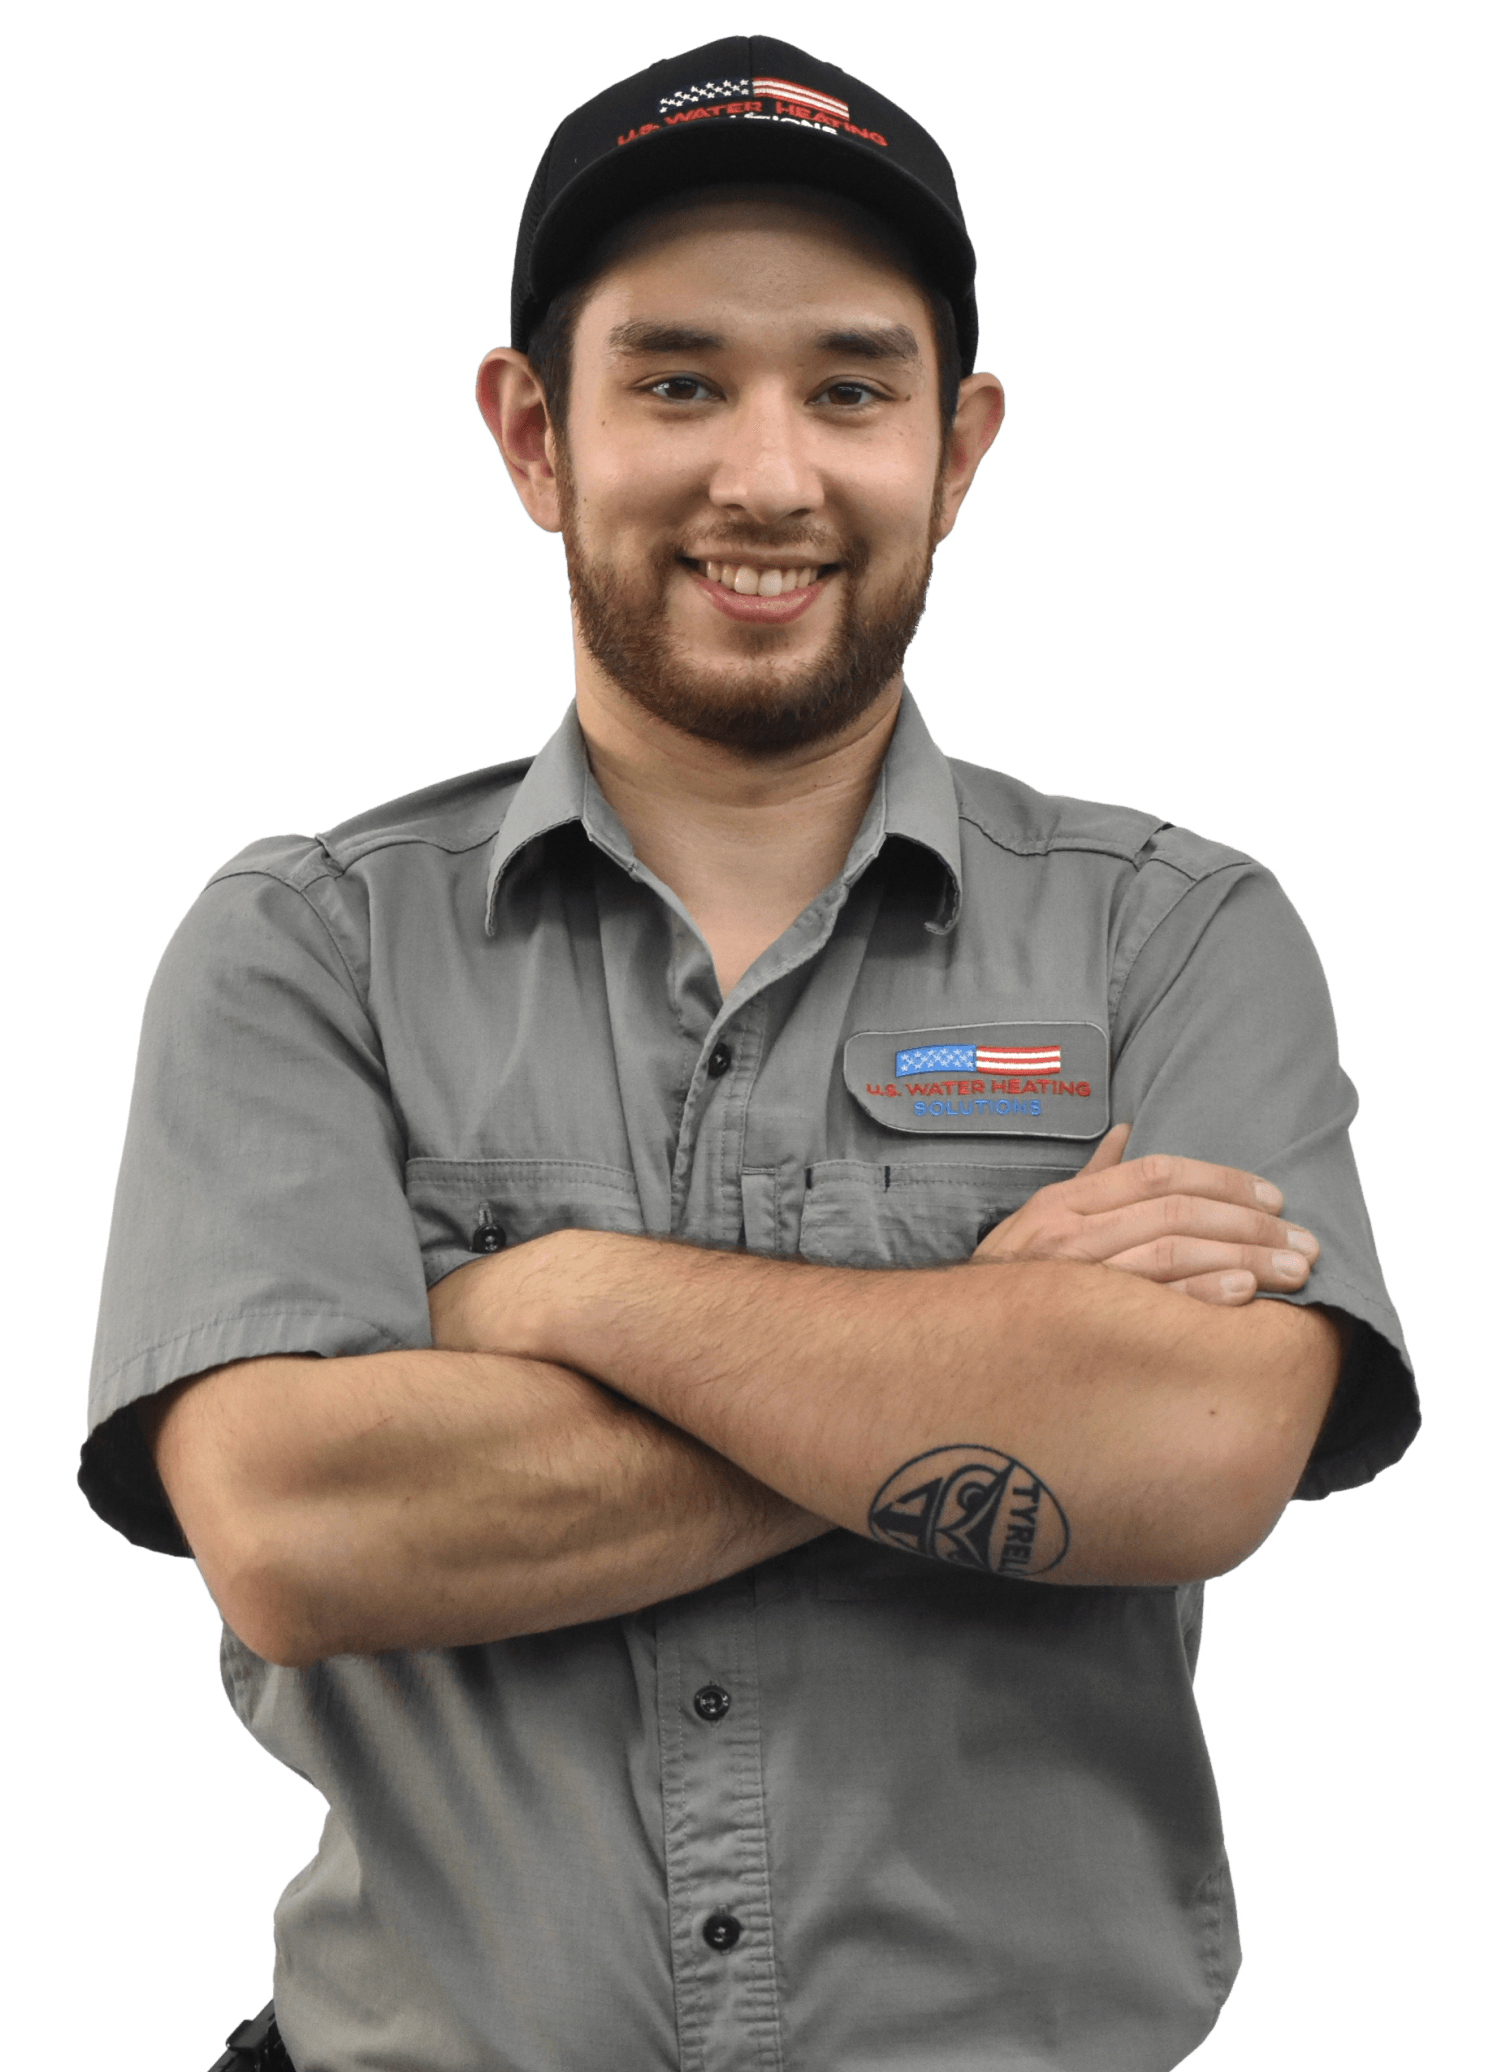 Técnico de servicio que repara calentadores de agua sonriente